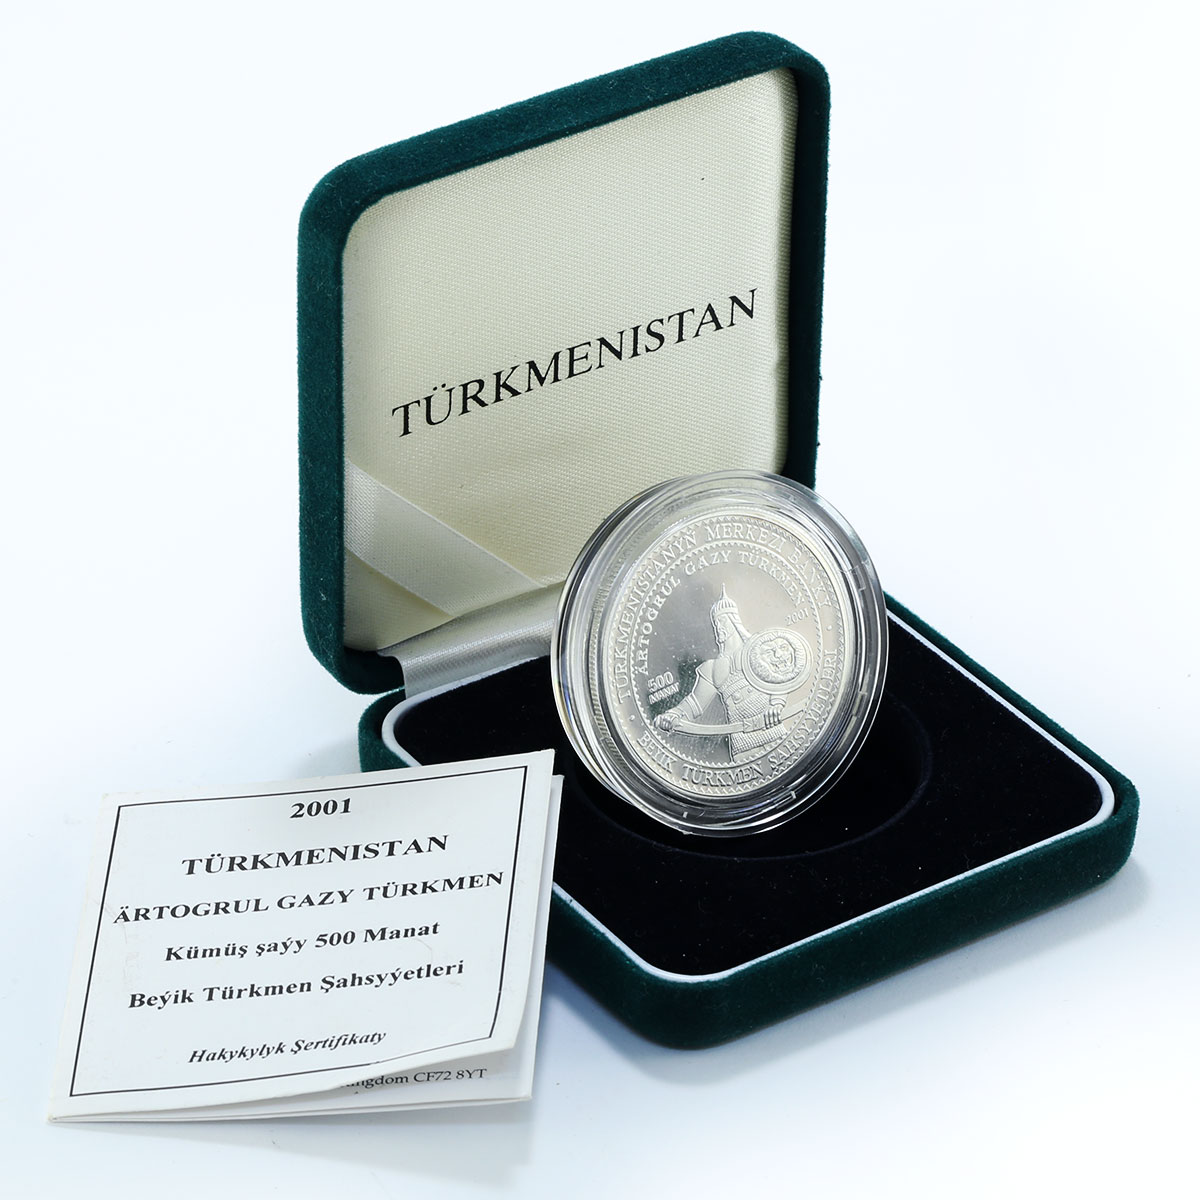 Turkmenistan 500 manat Artogrul Gazy proof silver coin 2001